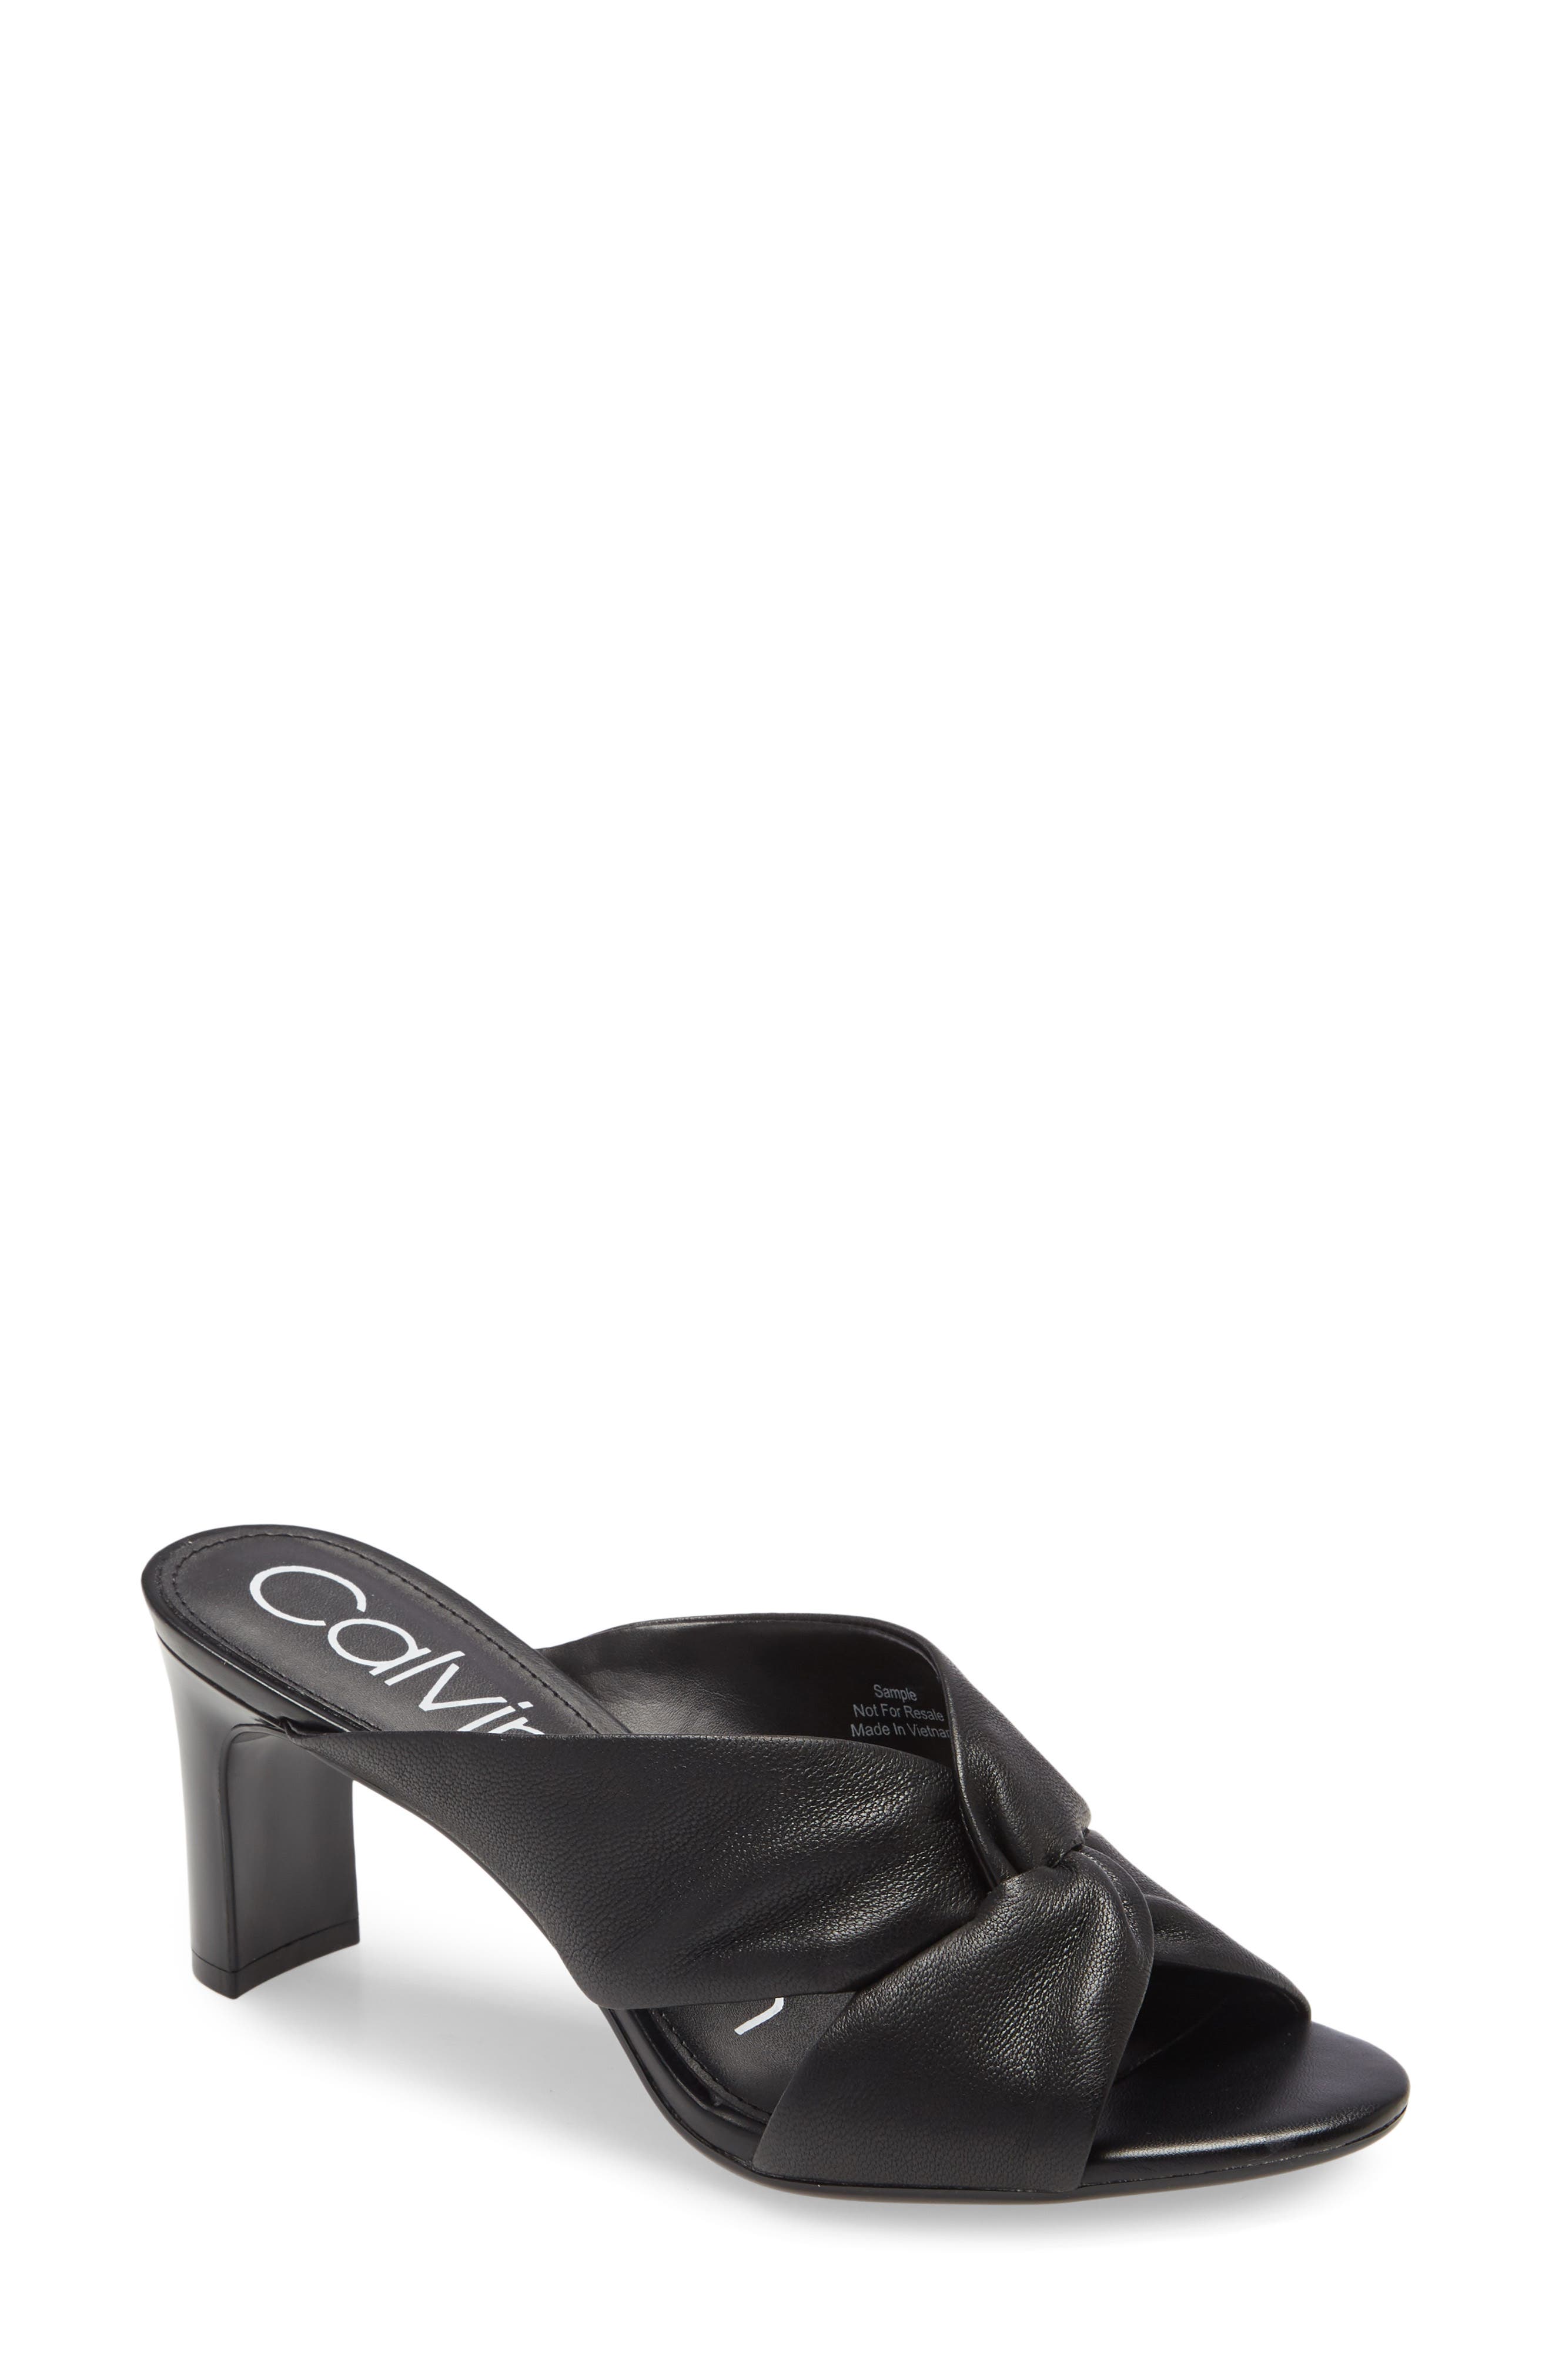 UPC 194060410494 product image for Women's Calvin Klein Omarion Sandal, Size 11 M - Black | upcitemdb.com